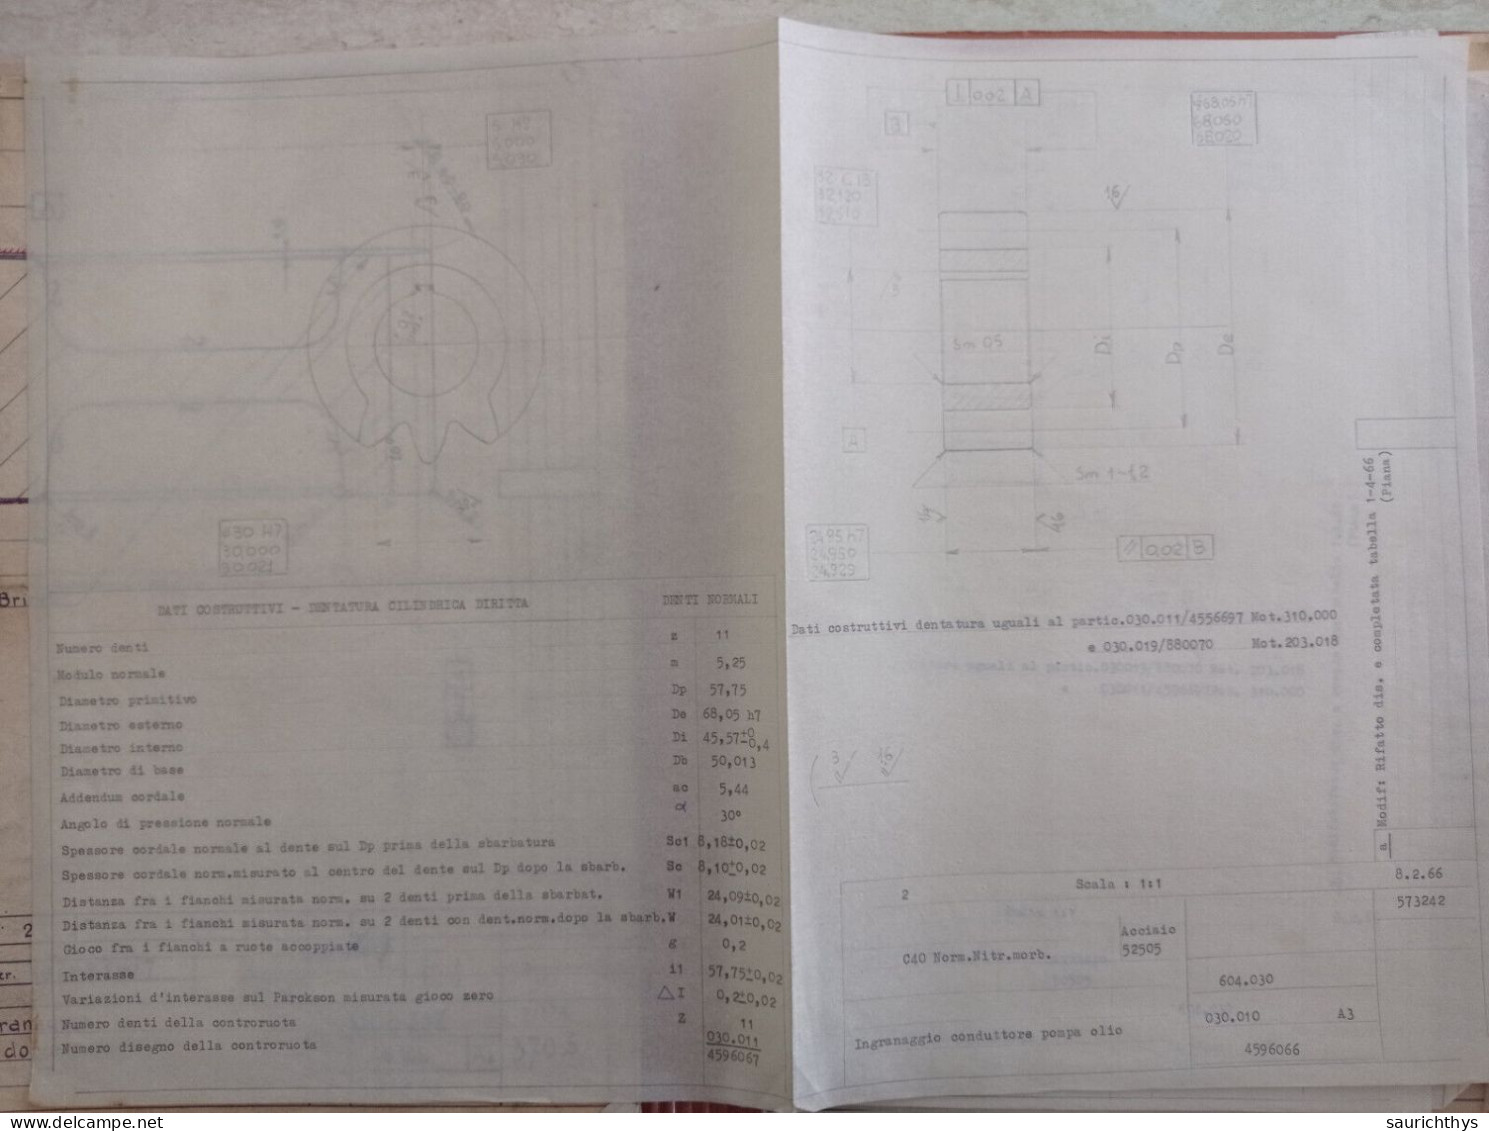 Cartella documenti Fiat TTS Uffici tecnici autoveicoli disegni tecnici in schizzi originali e copie conformi d'epoca